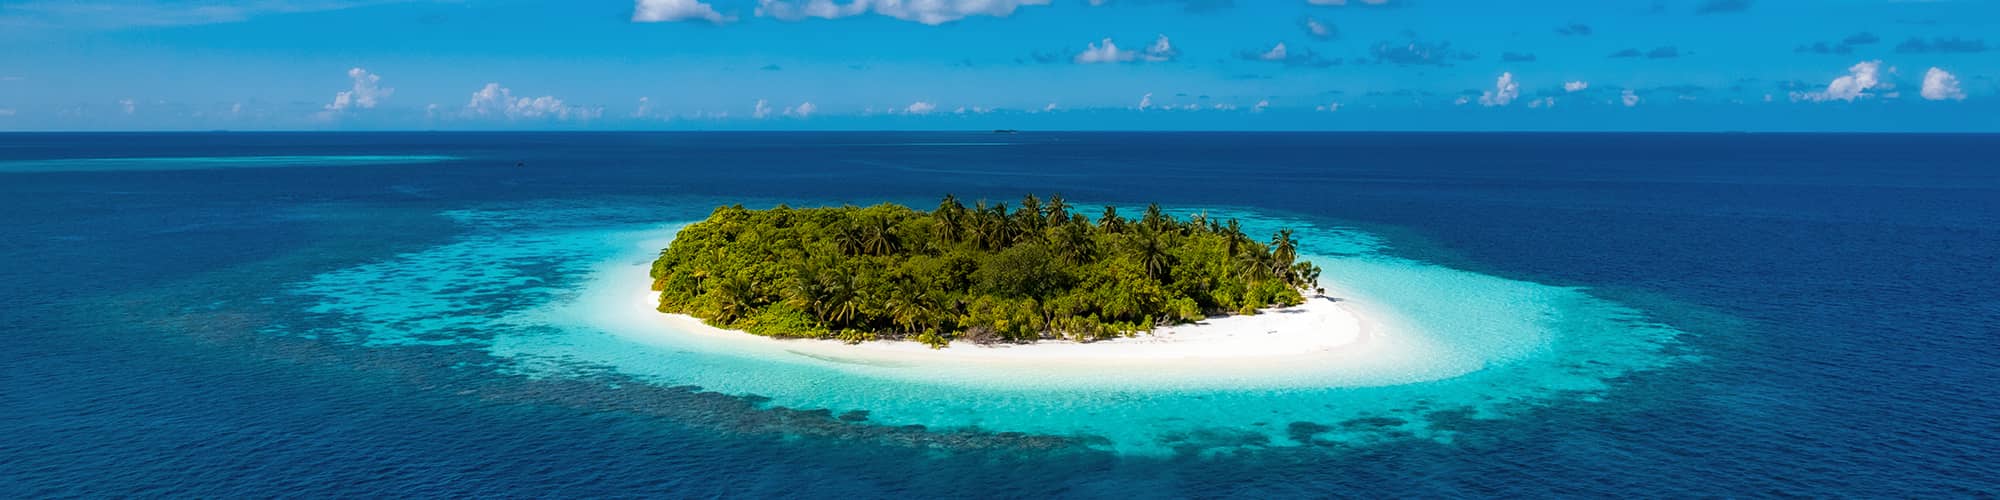 Trek aux Maldives : snorkeling, randonnée et voyage  © Freesurf / Adobe Stock